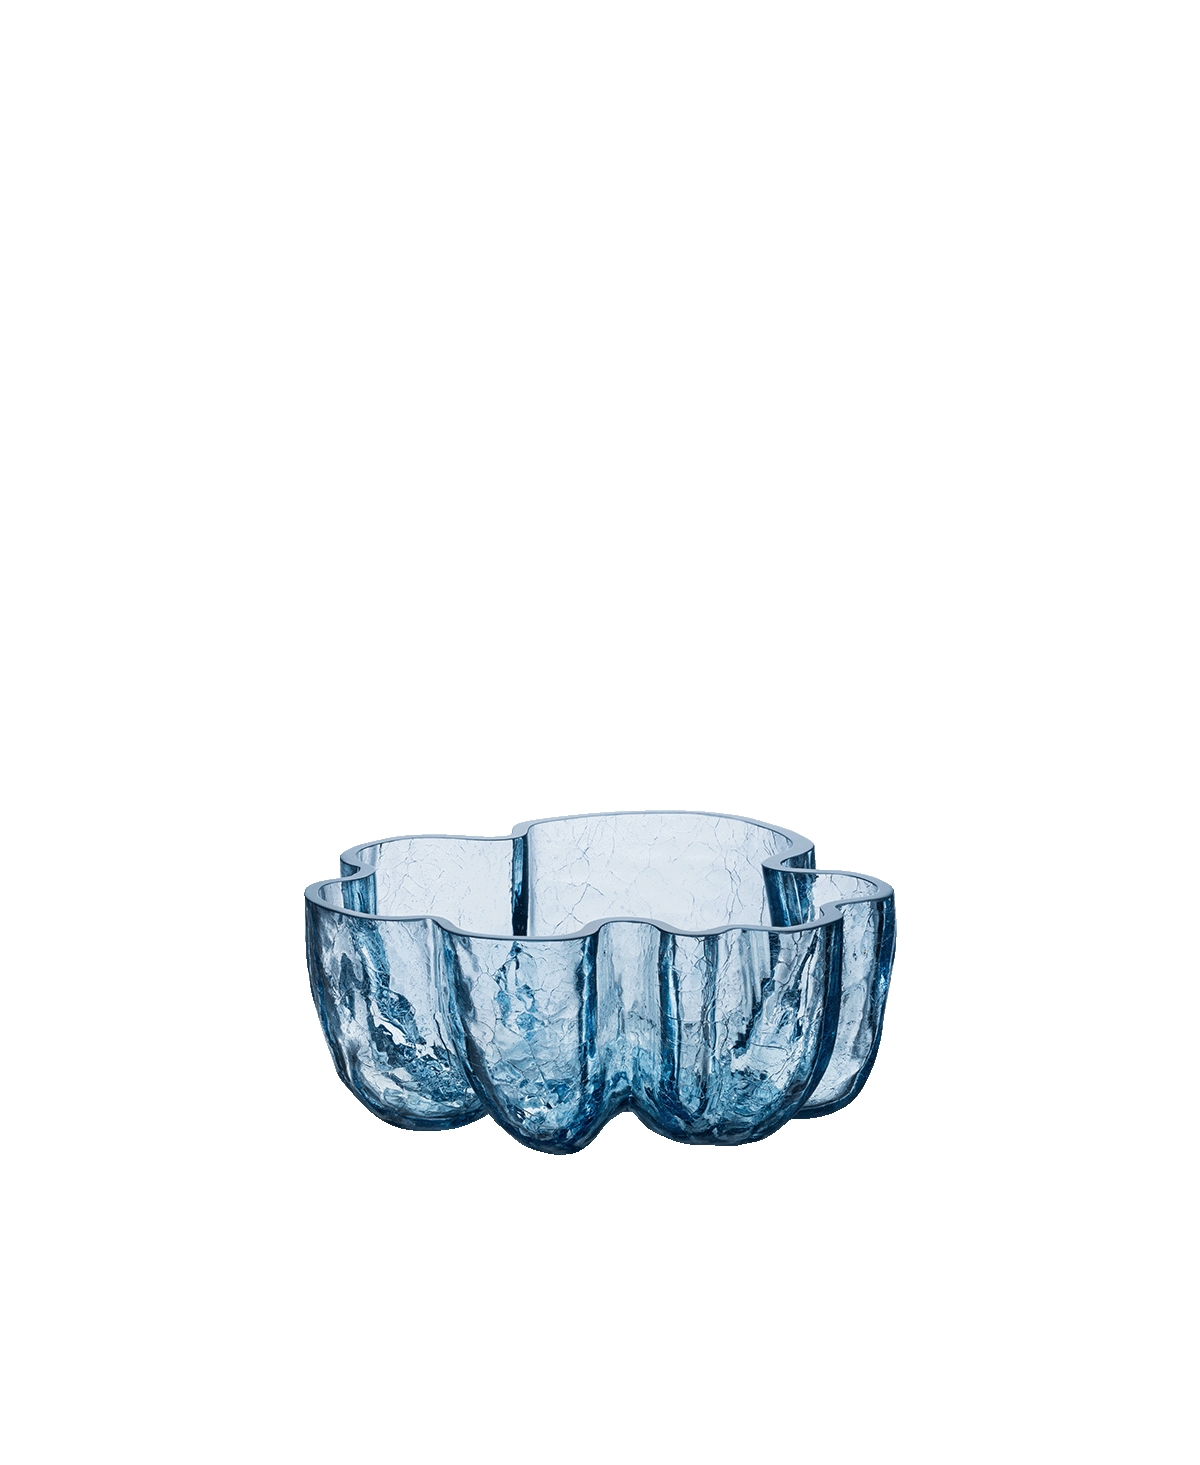 Kosta Boda Crackle Circular Bowl In Blue